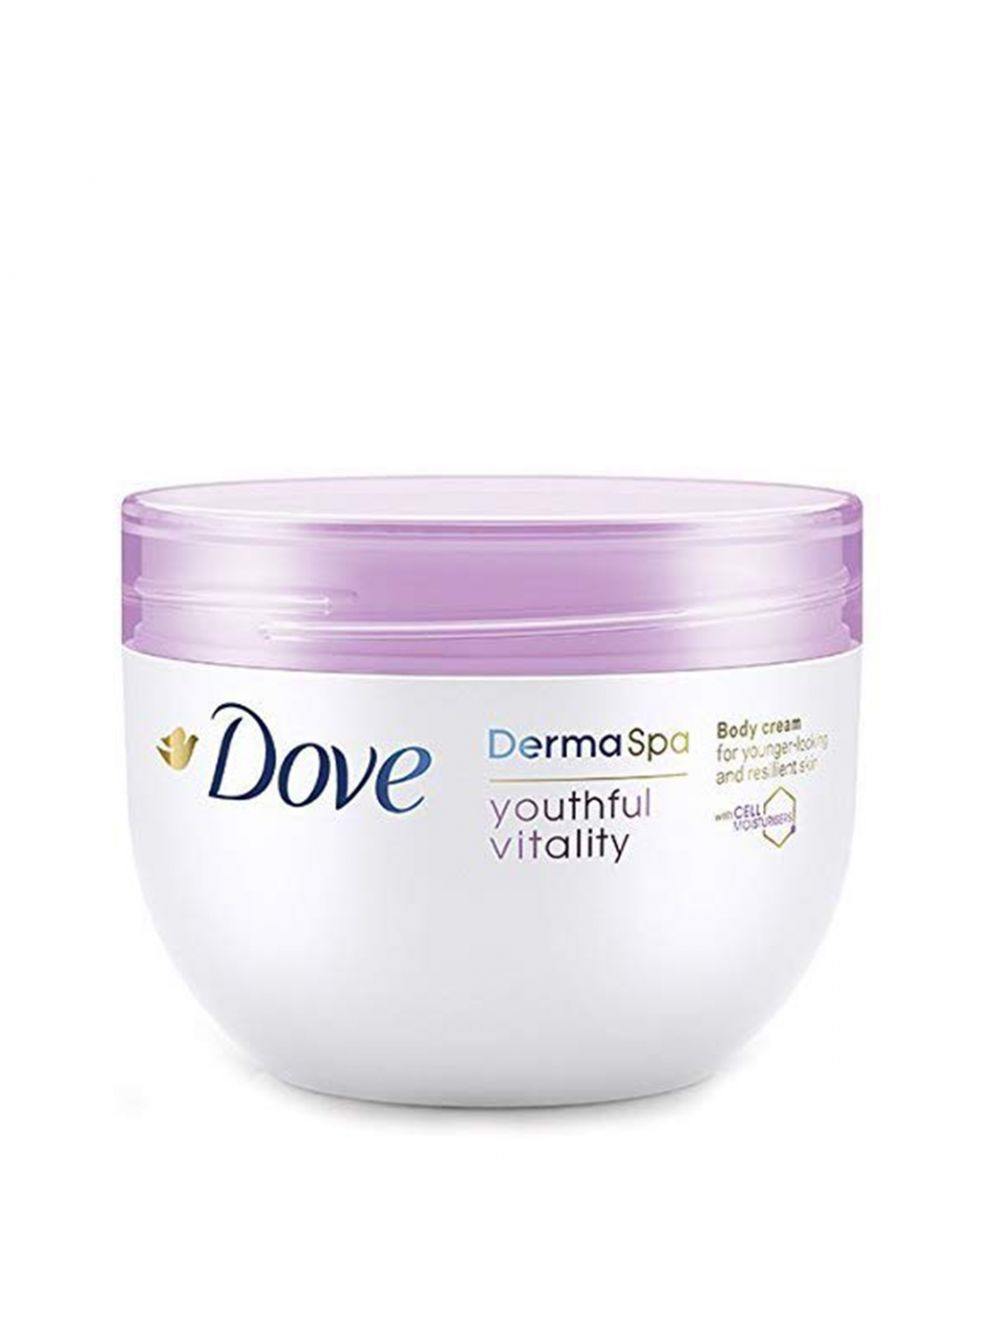 Dove DermaSpa Youthful Vitality Body Cream (300ml) - Niram